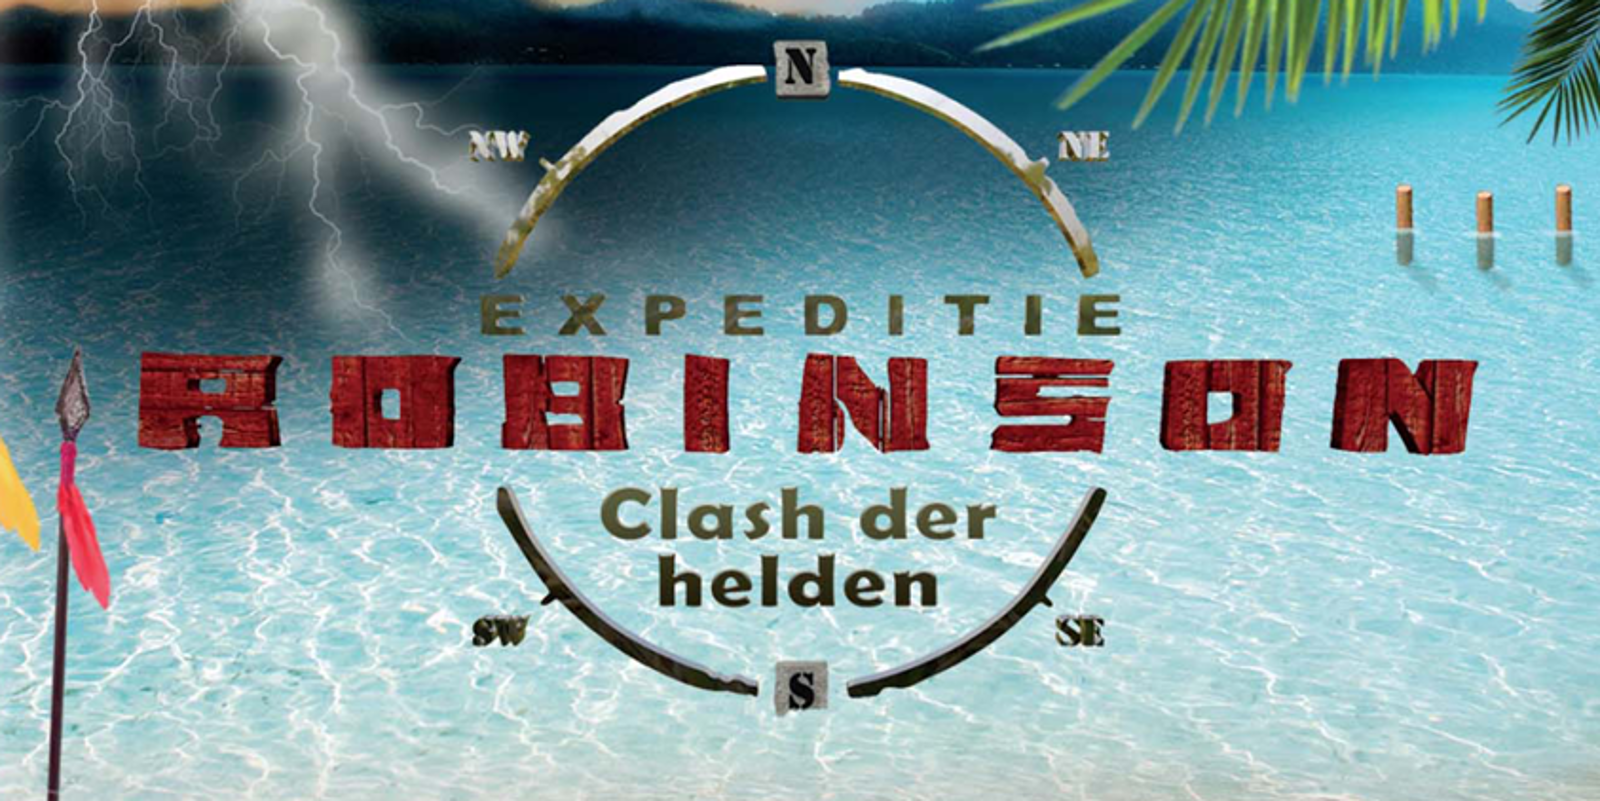 Expeditie Robinson -  Clash der helden